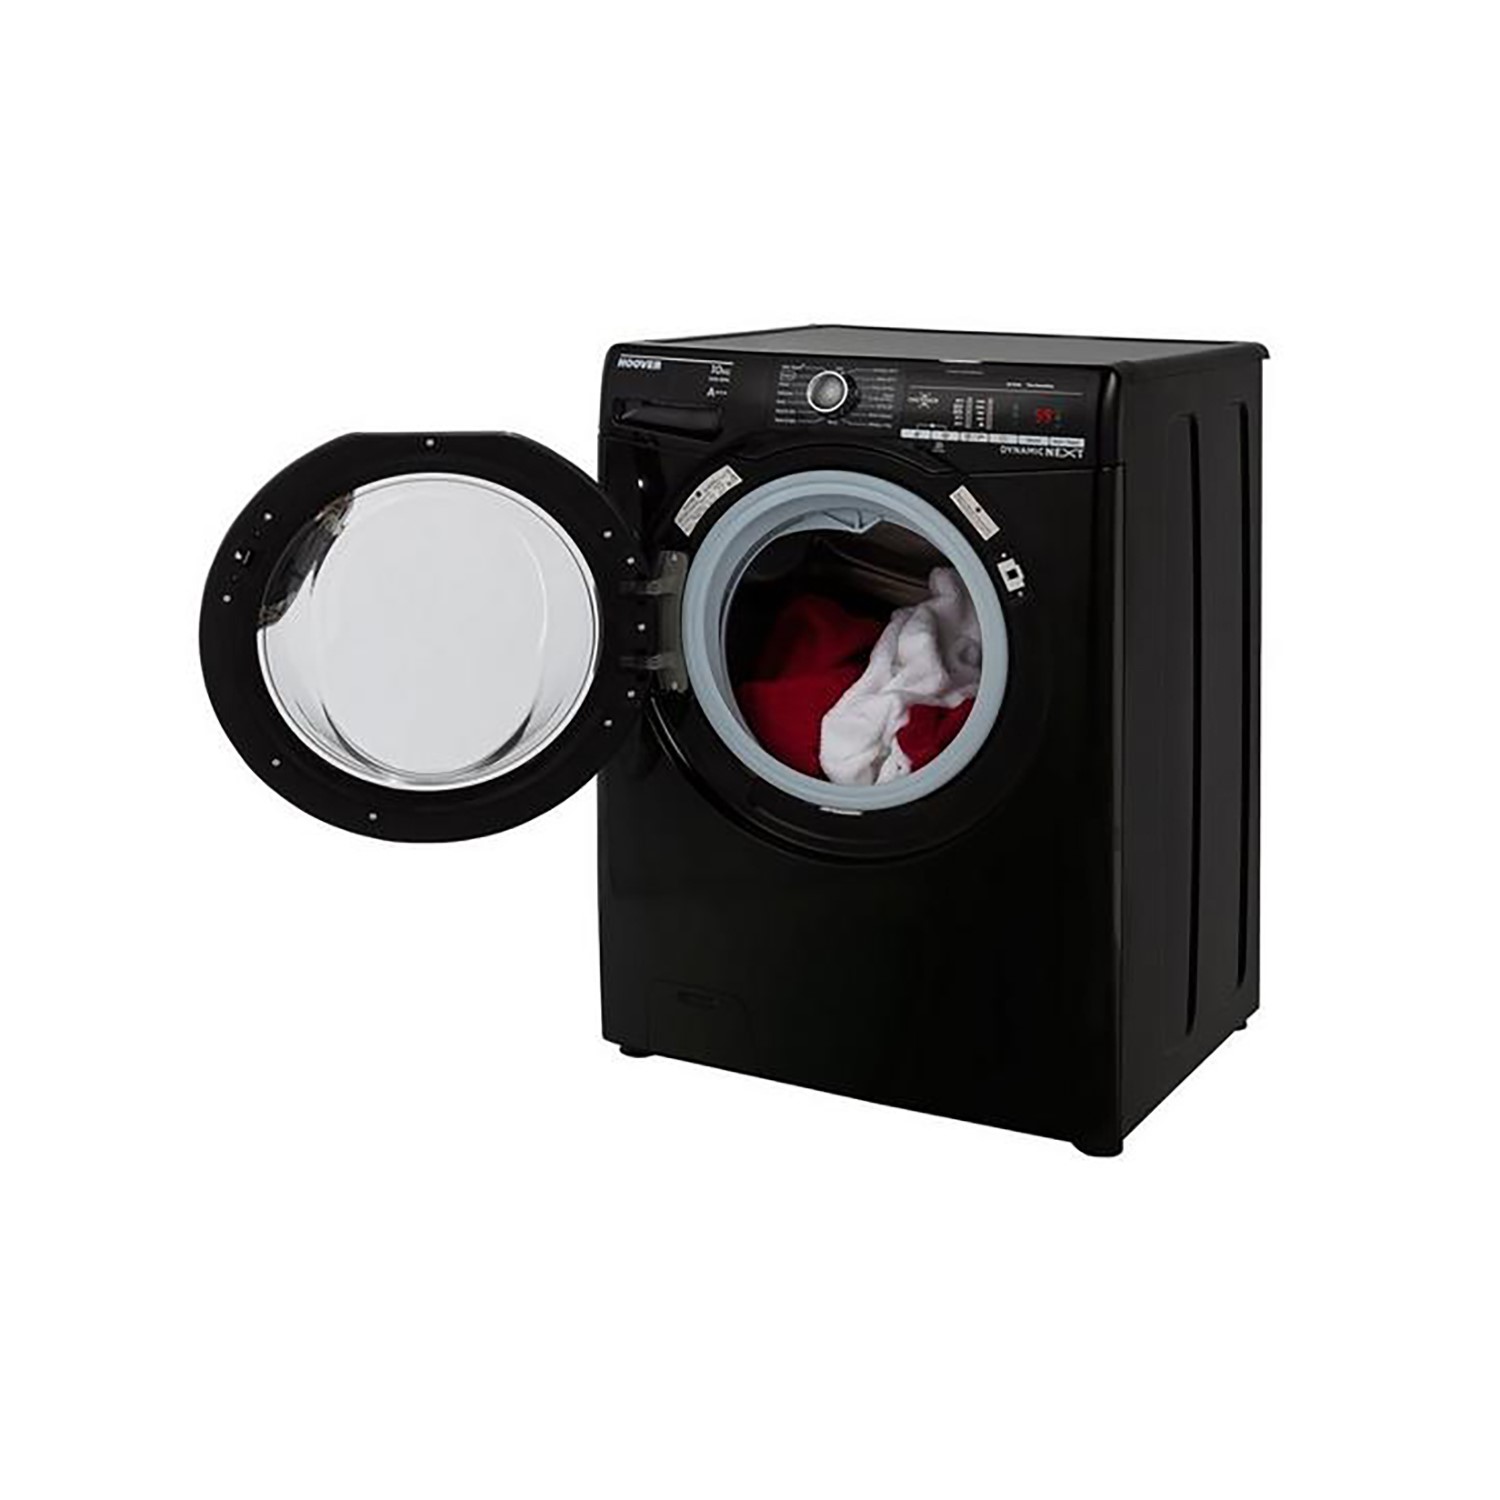 DXOA410C3B 10KG 1400 Spin Washing Machine